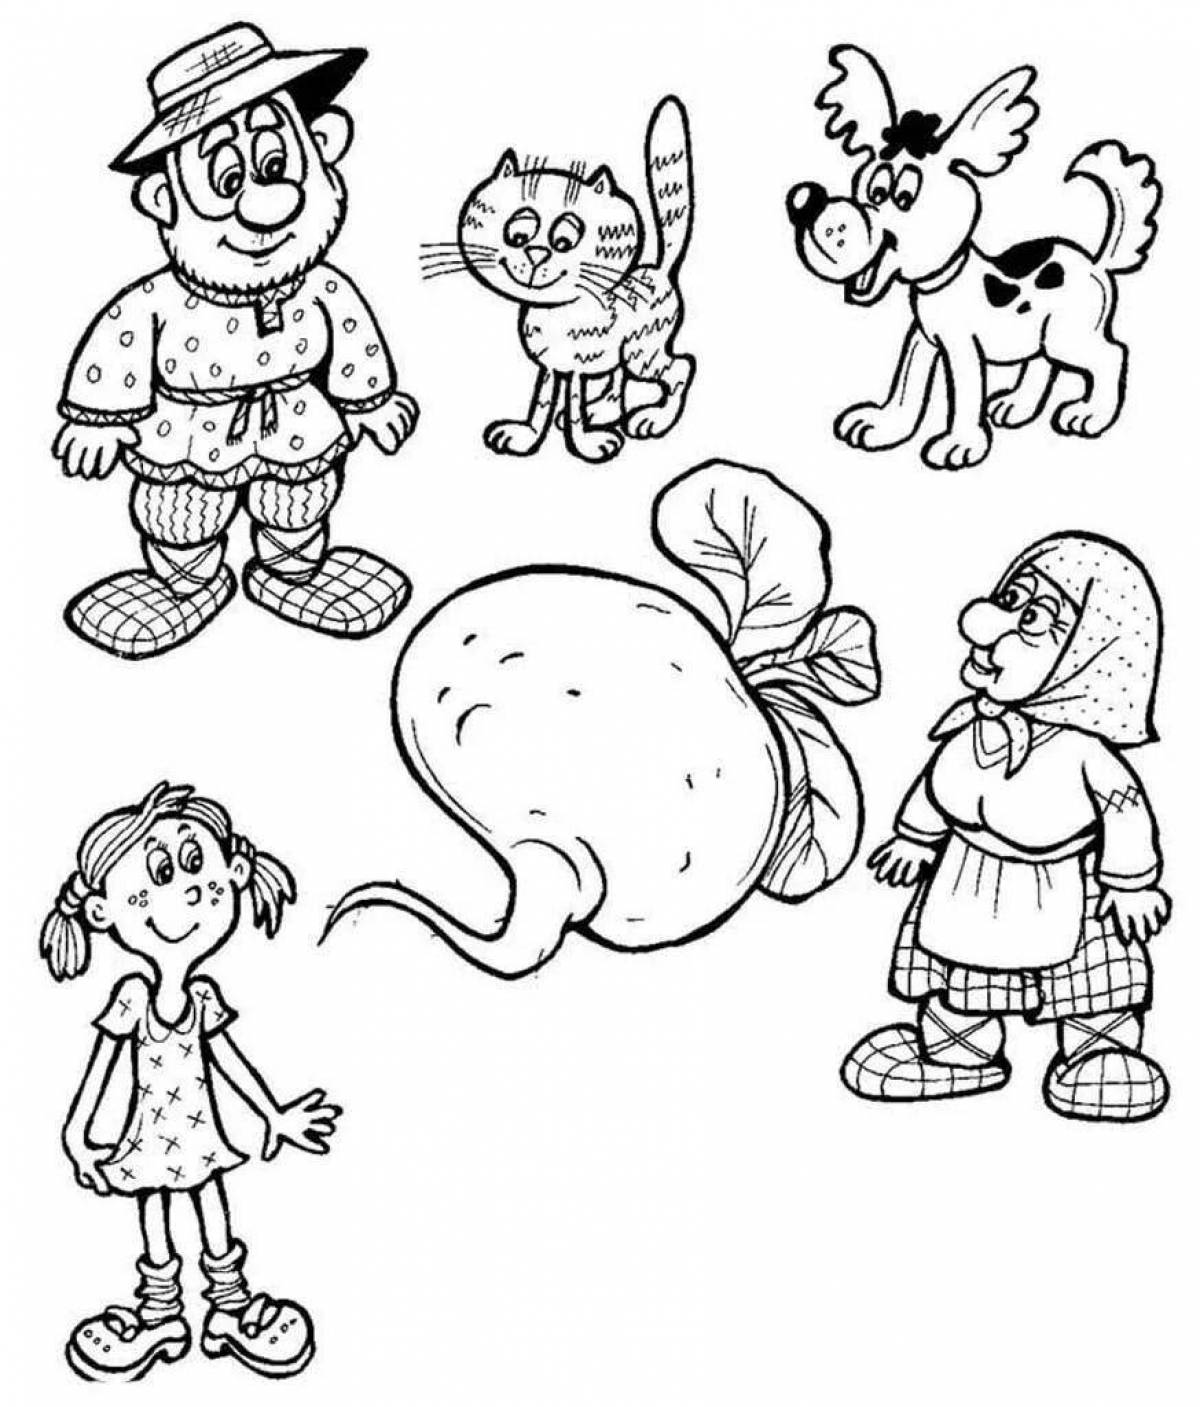 Wonderful turnip coloring book for kids